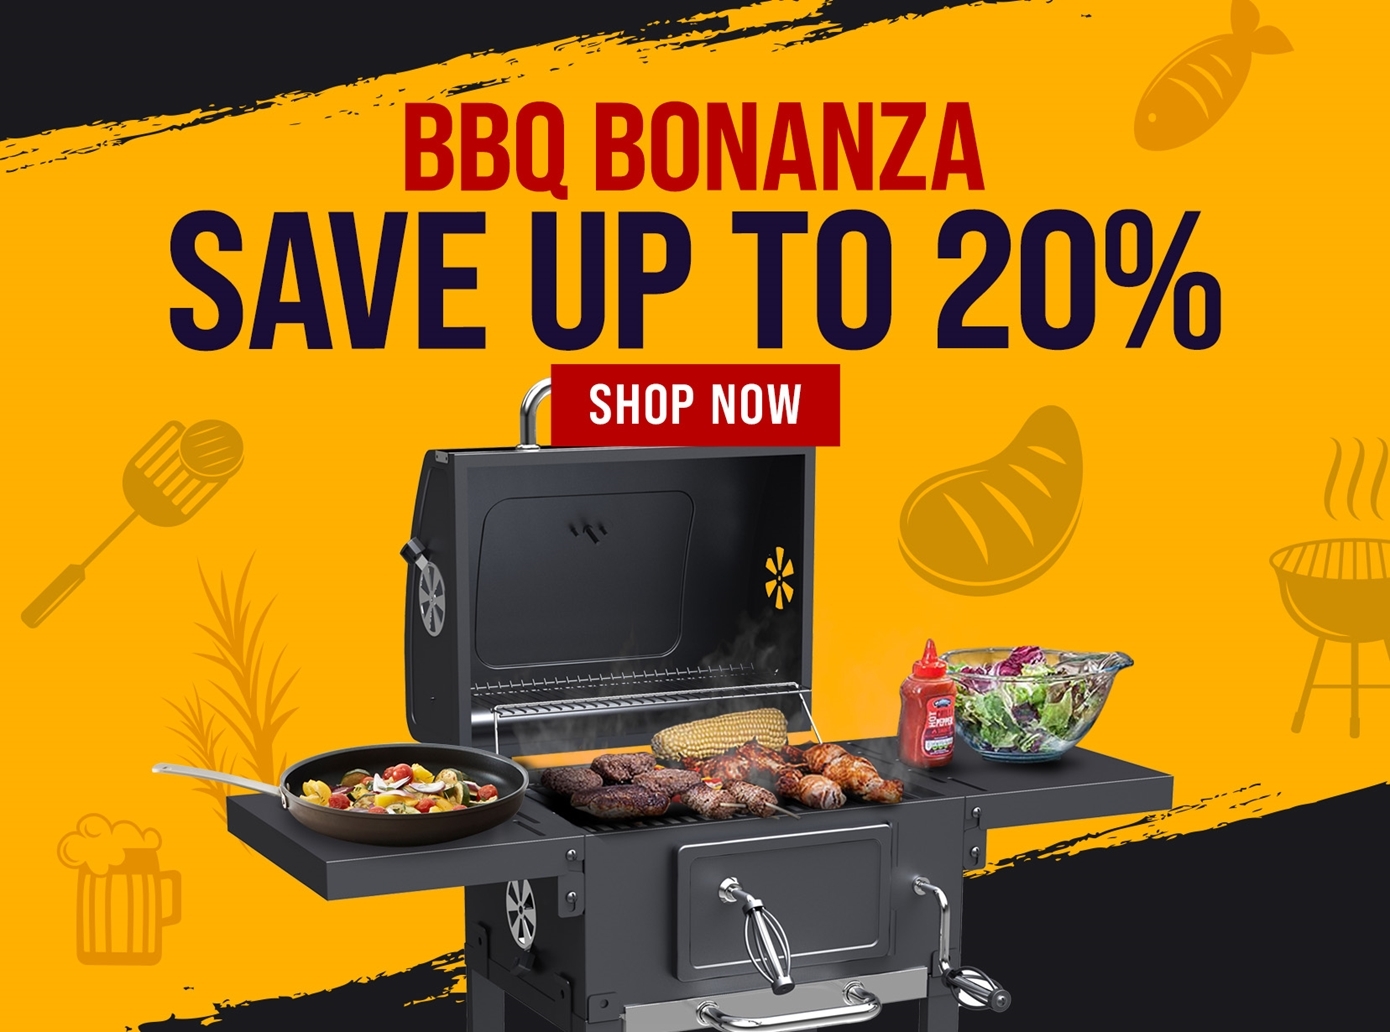 BBQ bonanza save up to 20%